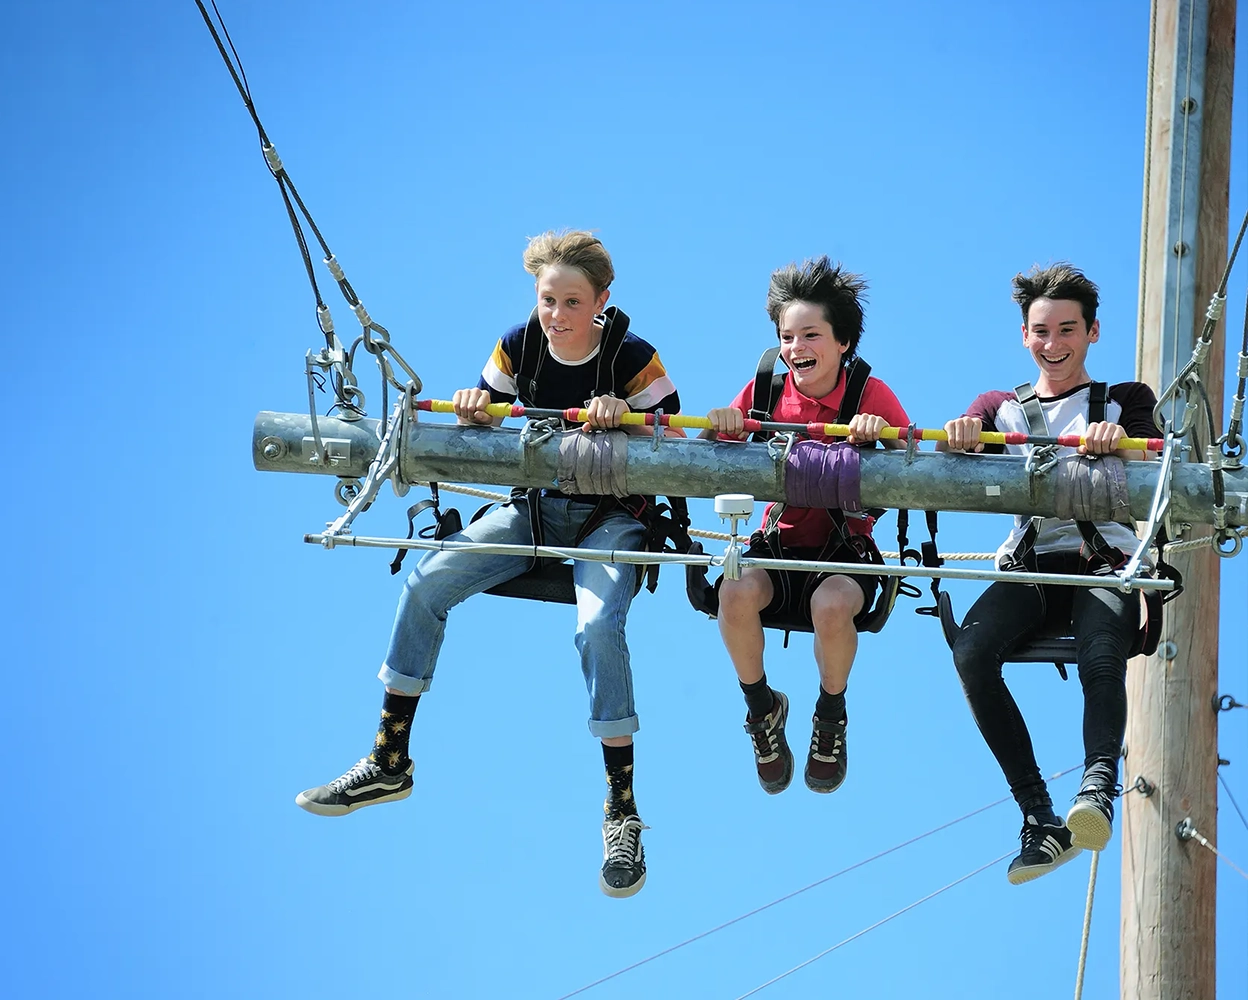 Kids on the gravity swing at eden